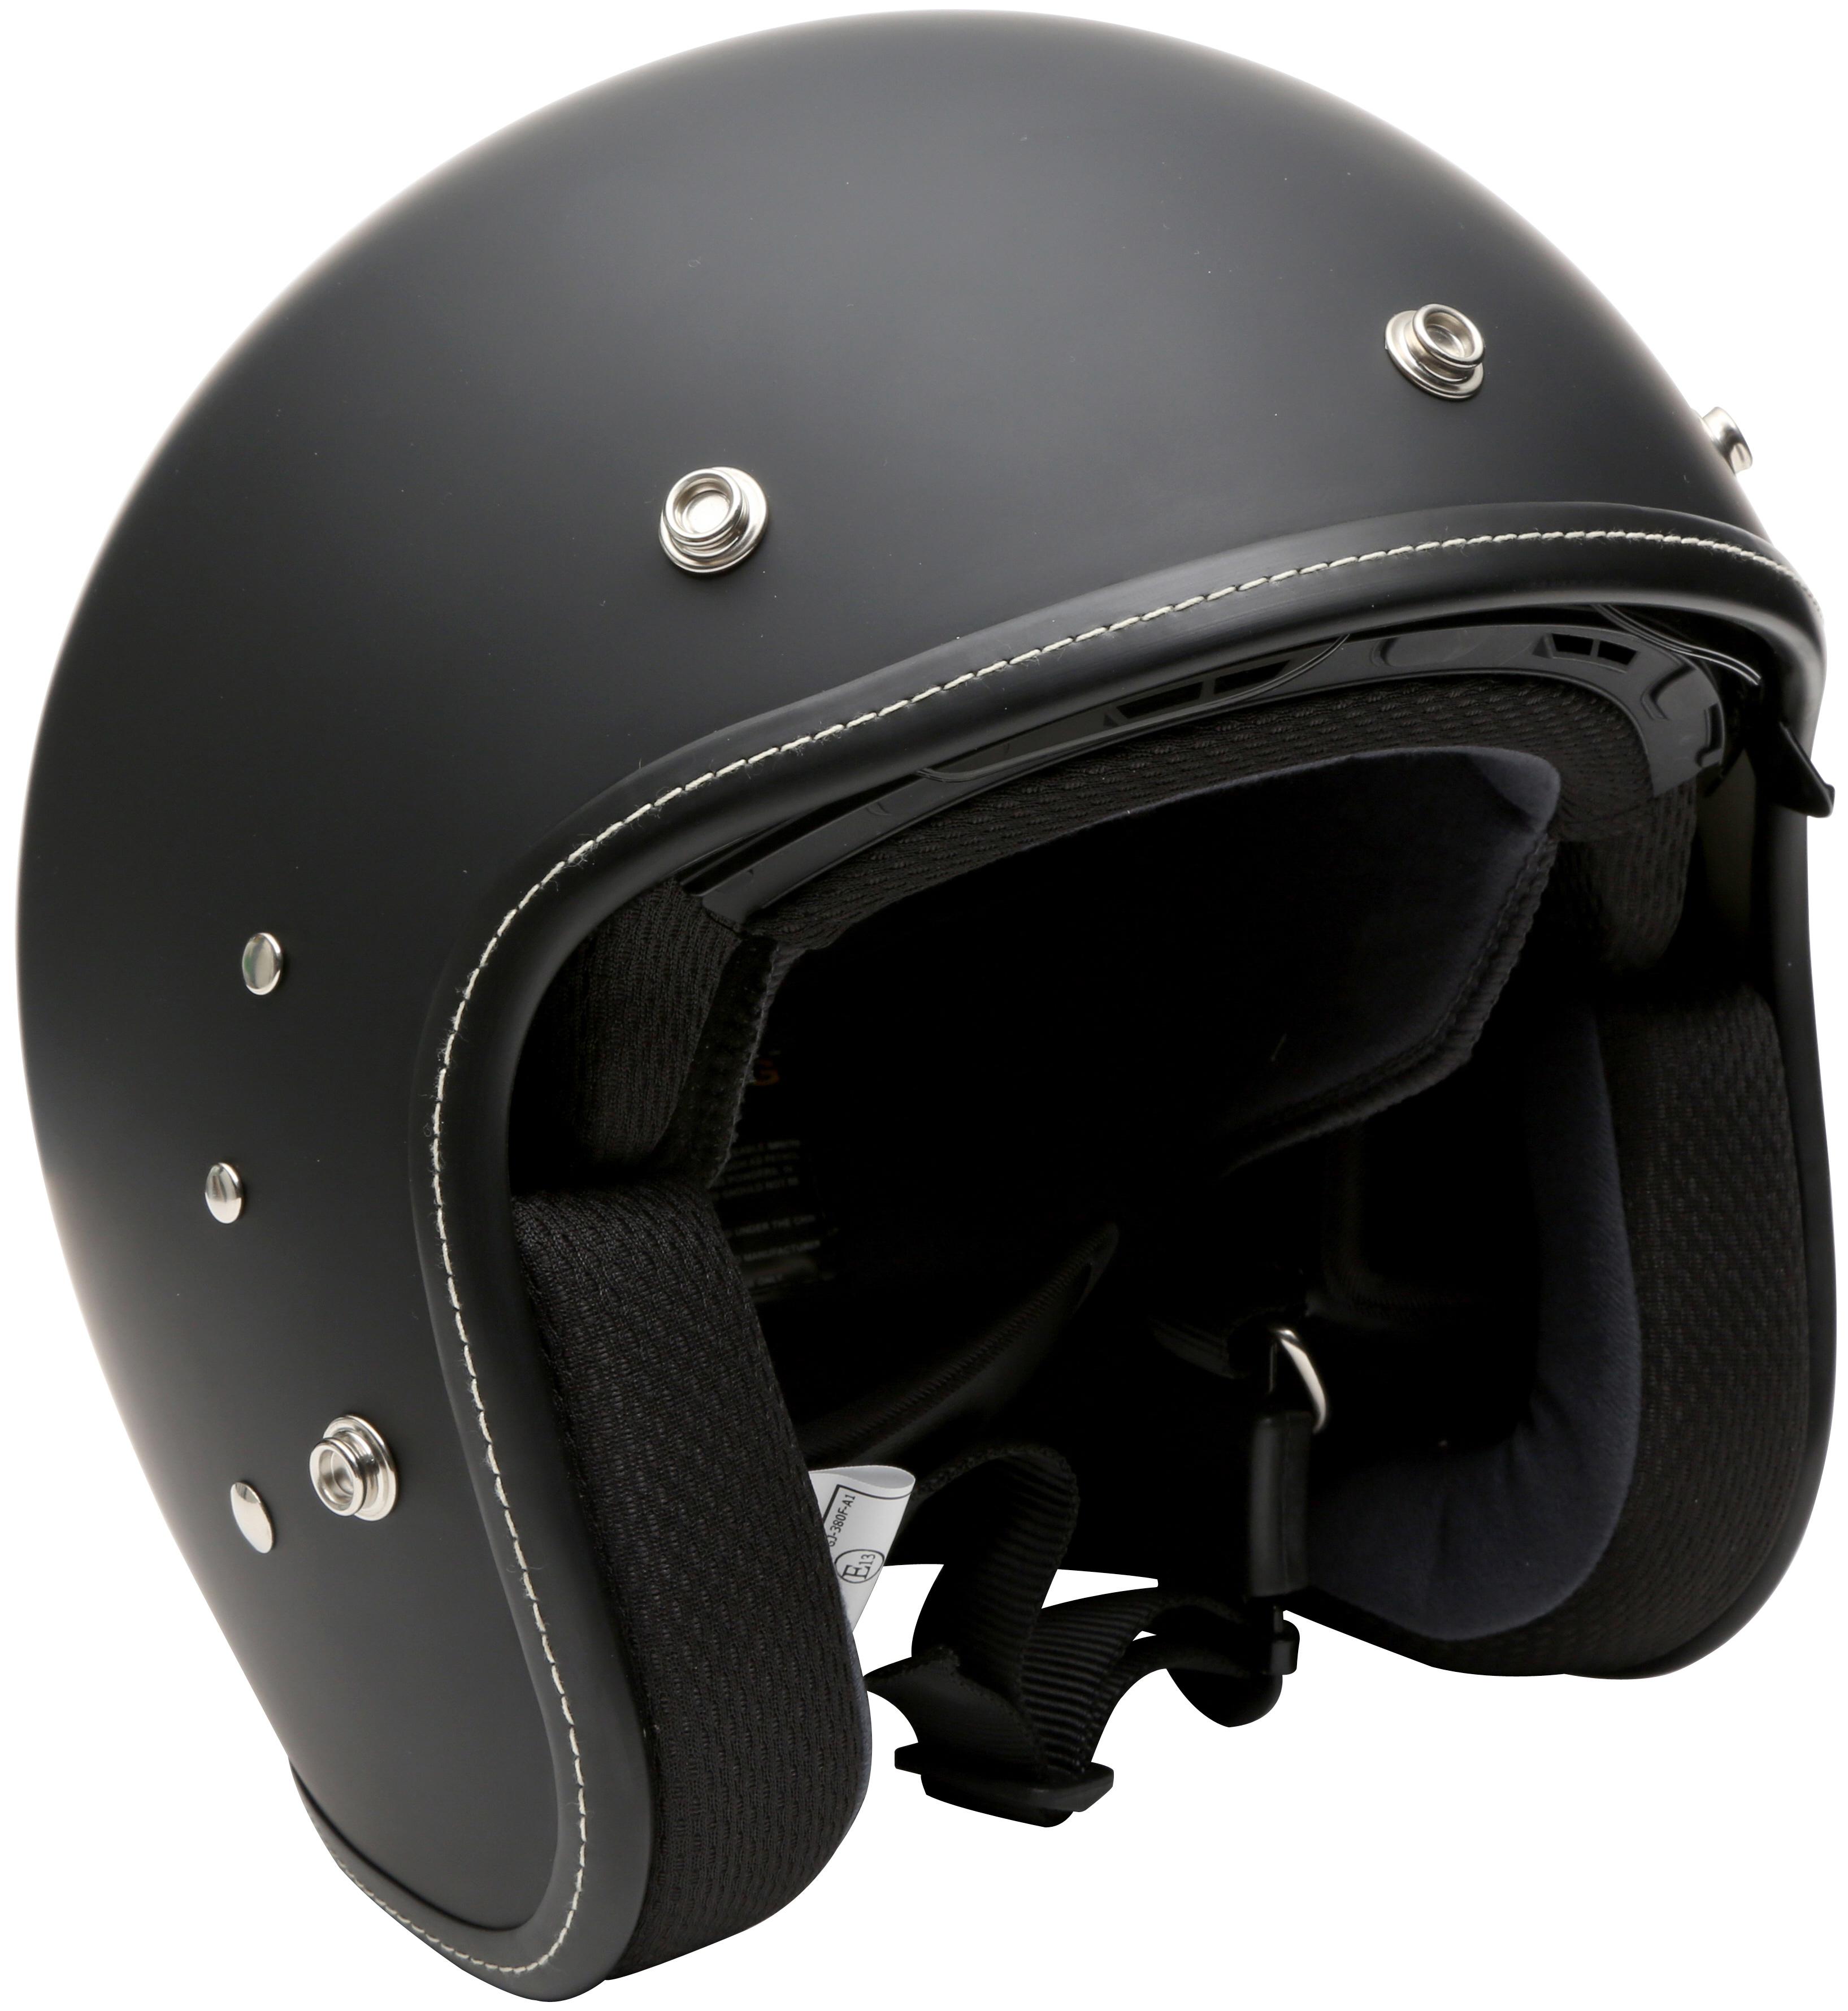 Duchinni D501 Open Face Motorcycle Helmet - Black, Medium